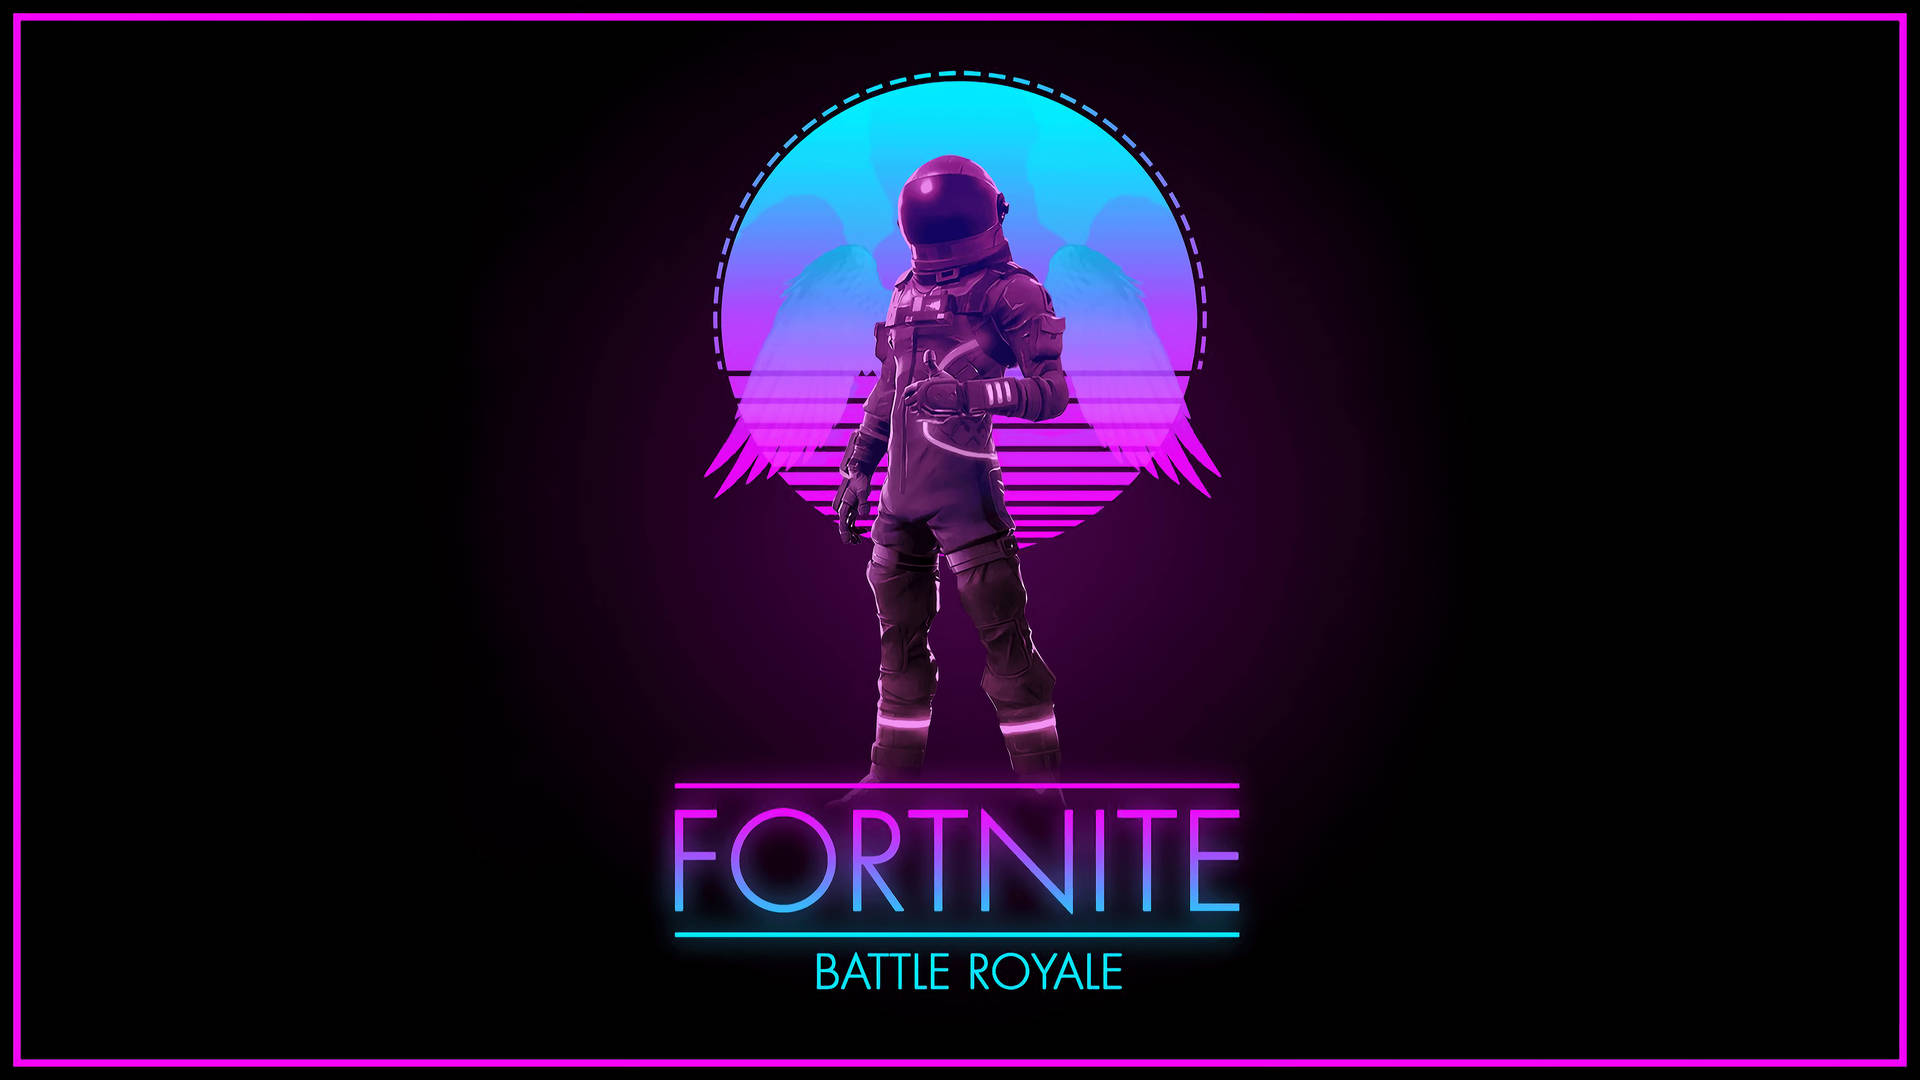 Cool Fortnite Battle Royale Wallpaper